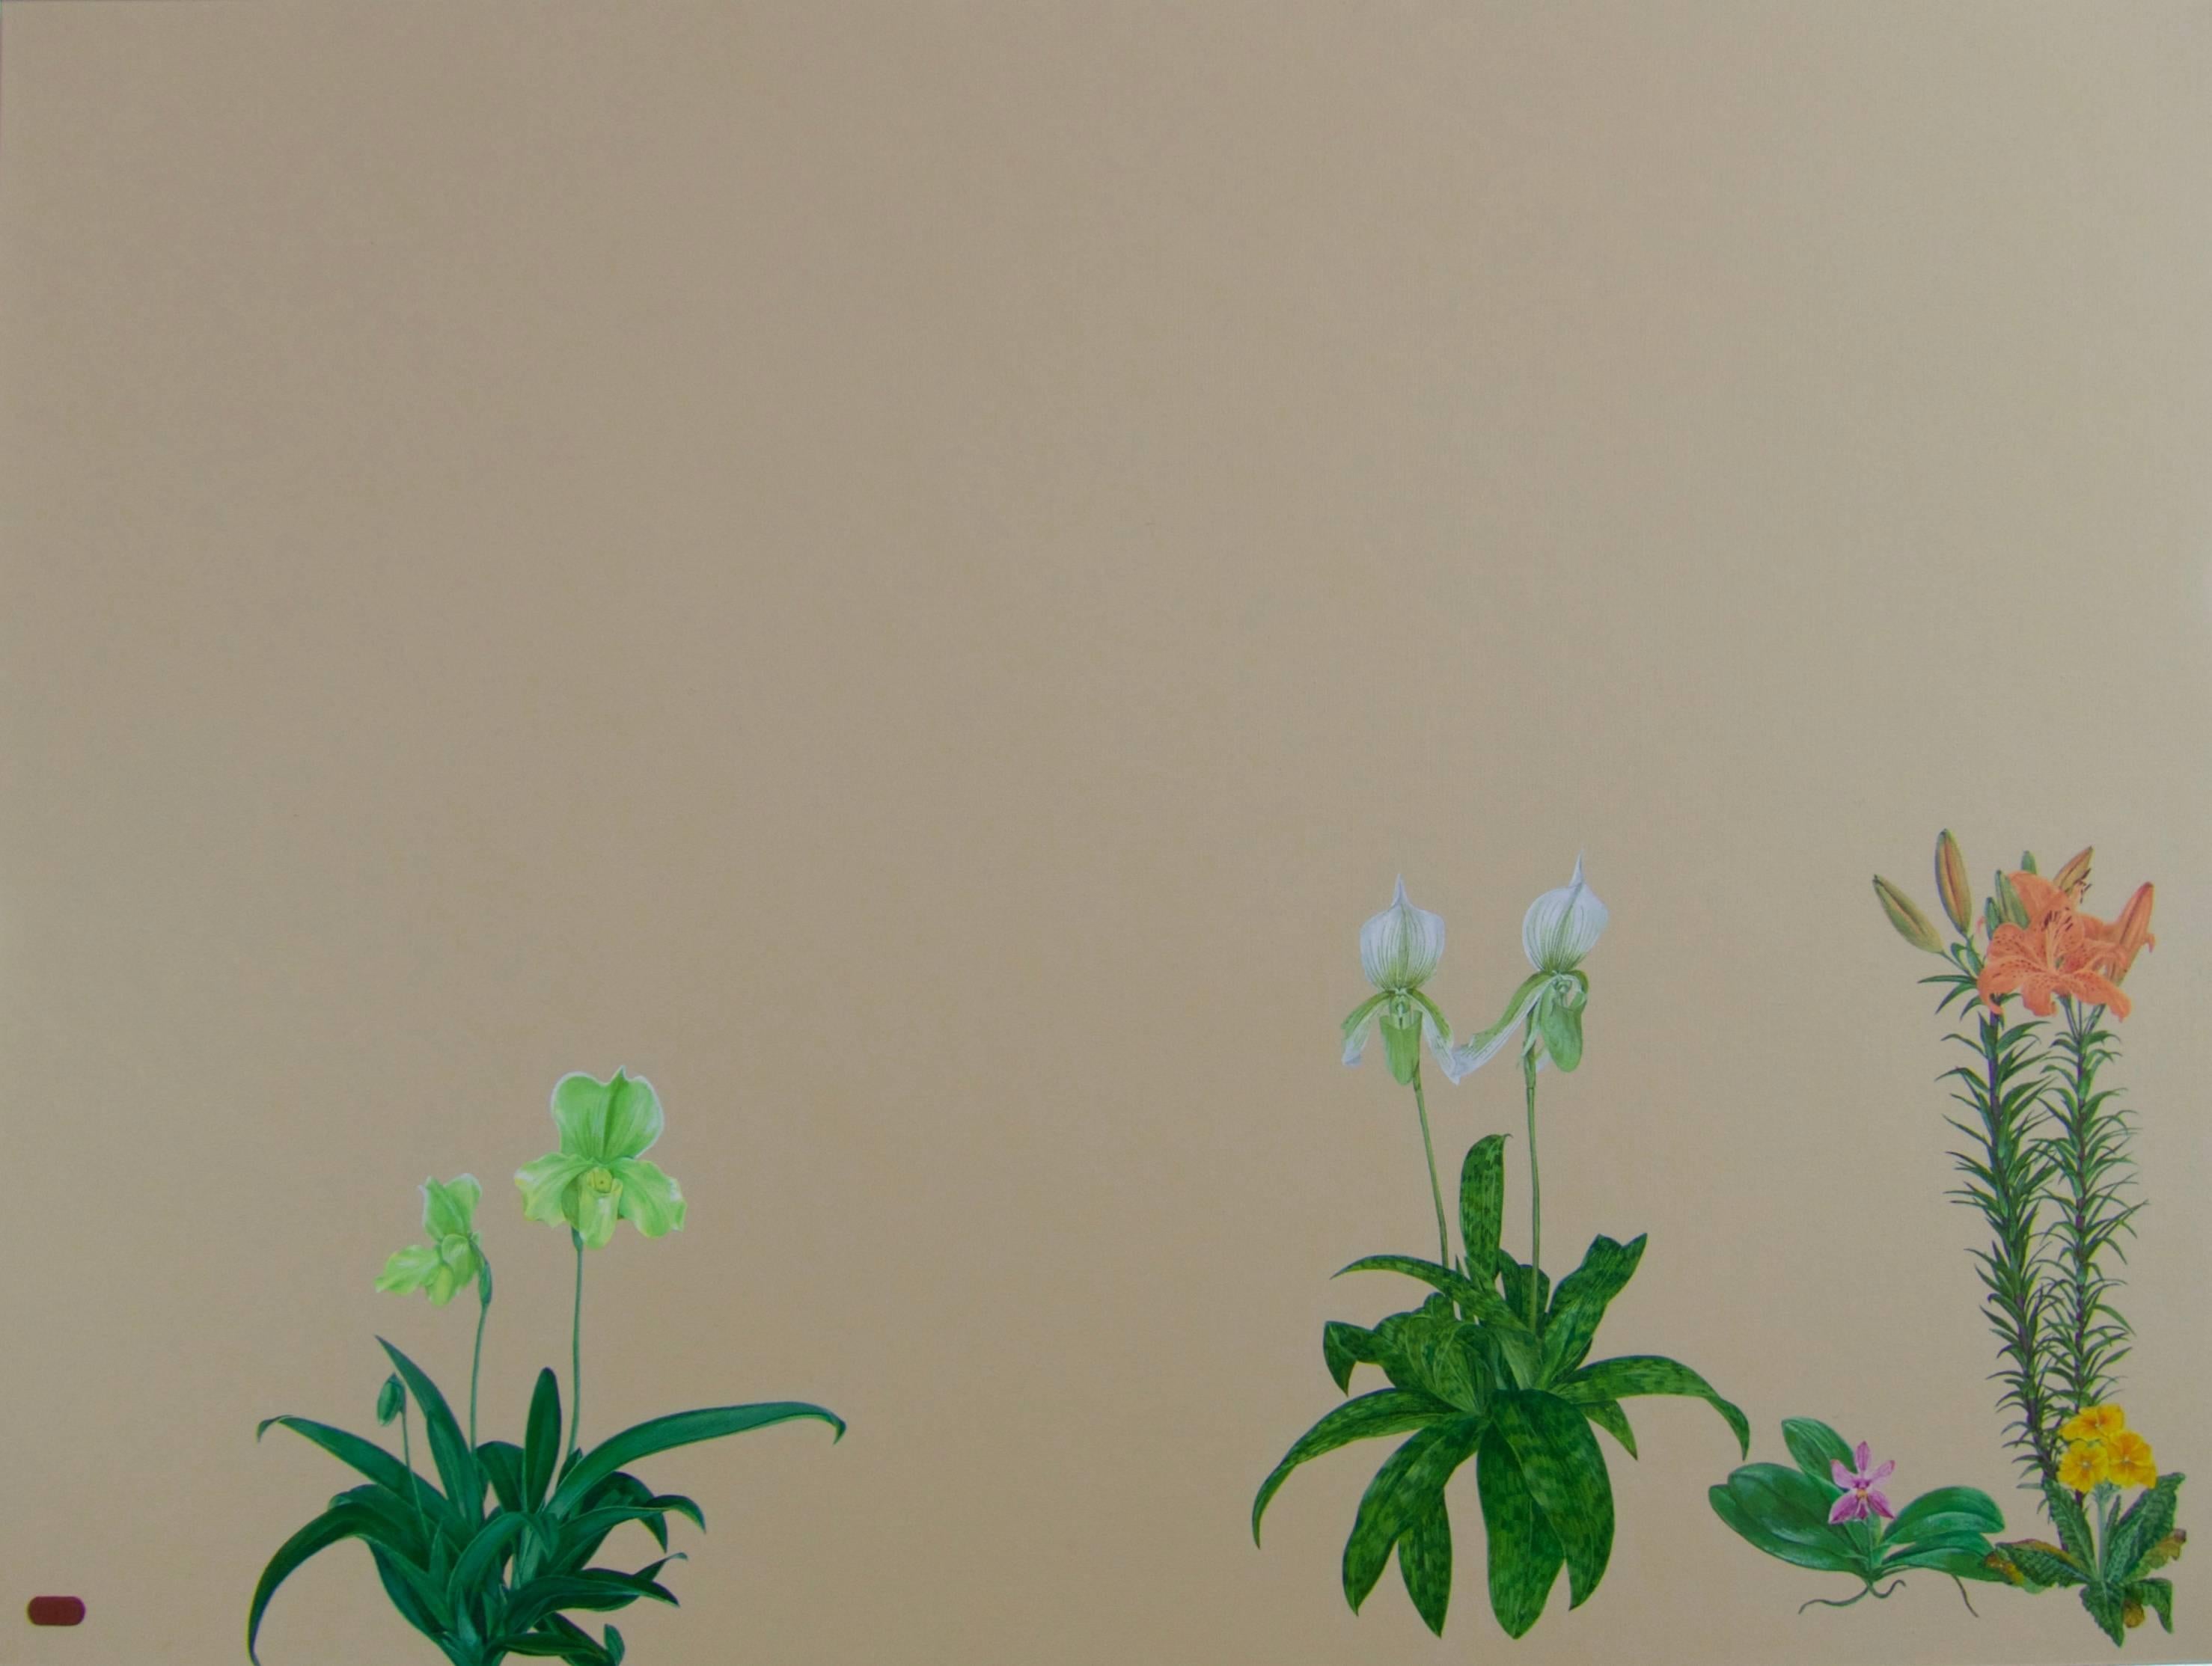 Marcia I. Dawson Still-Life Painting - Hyperrealist botanical painting  - Orchid plants